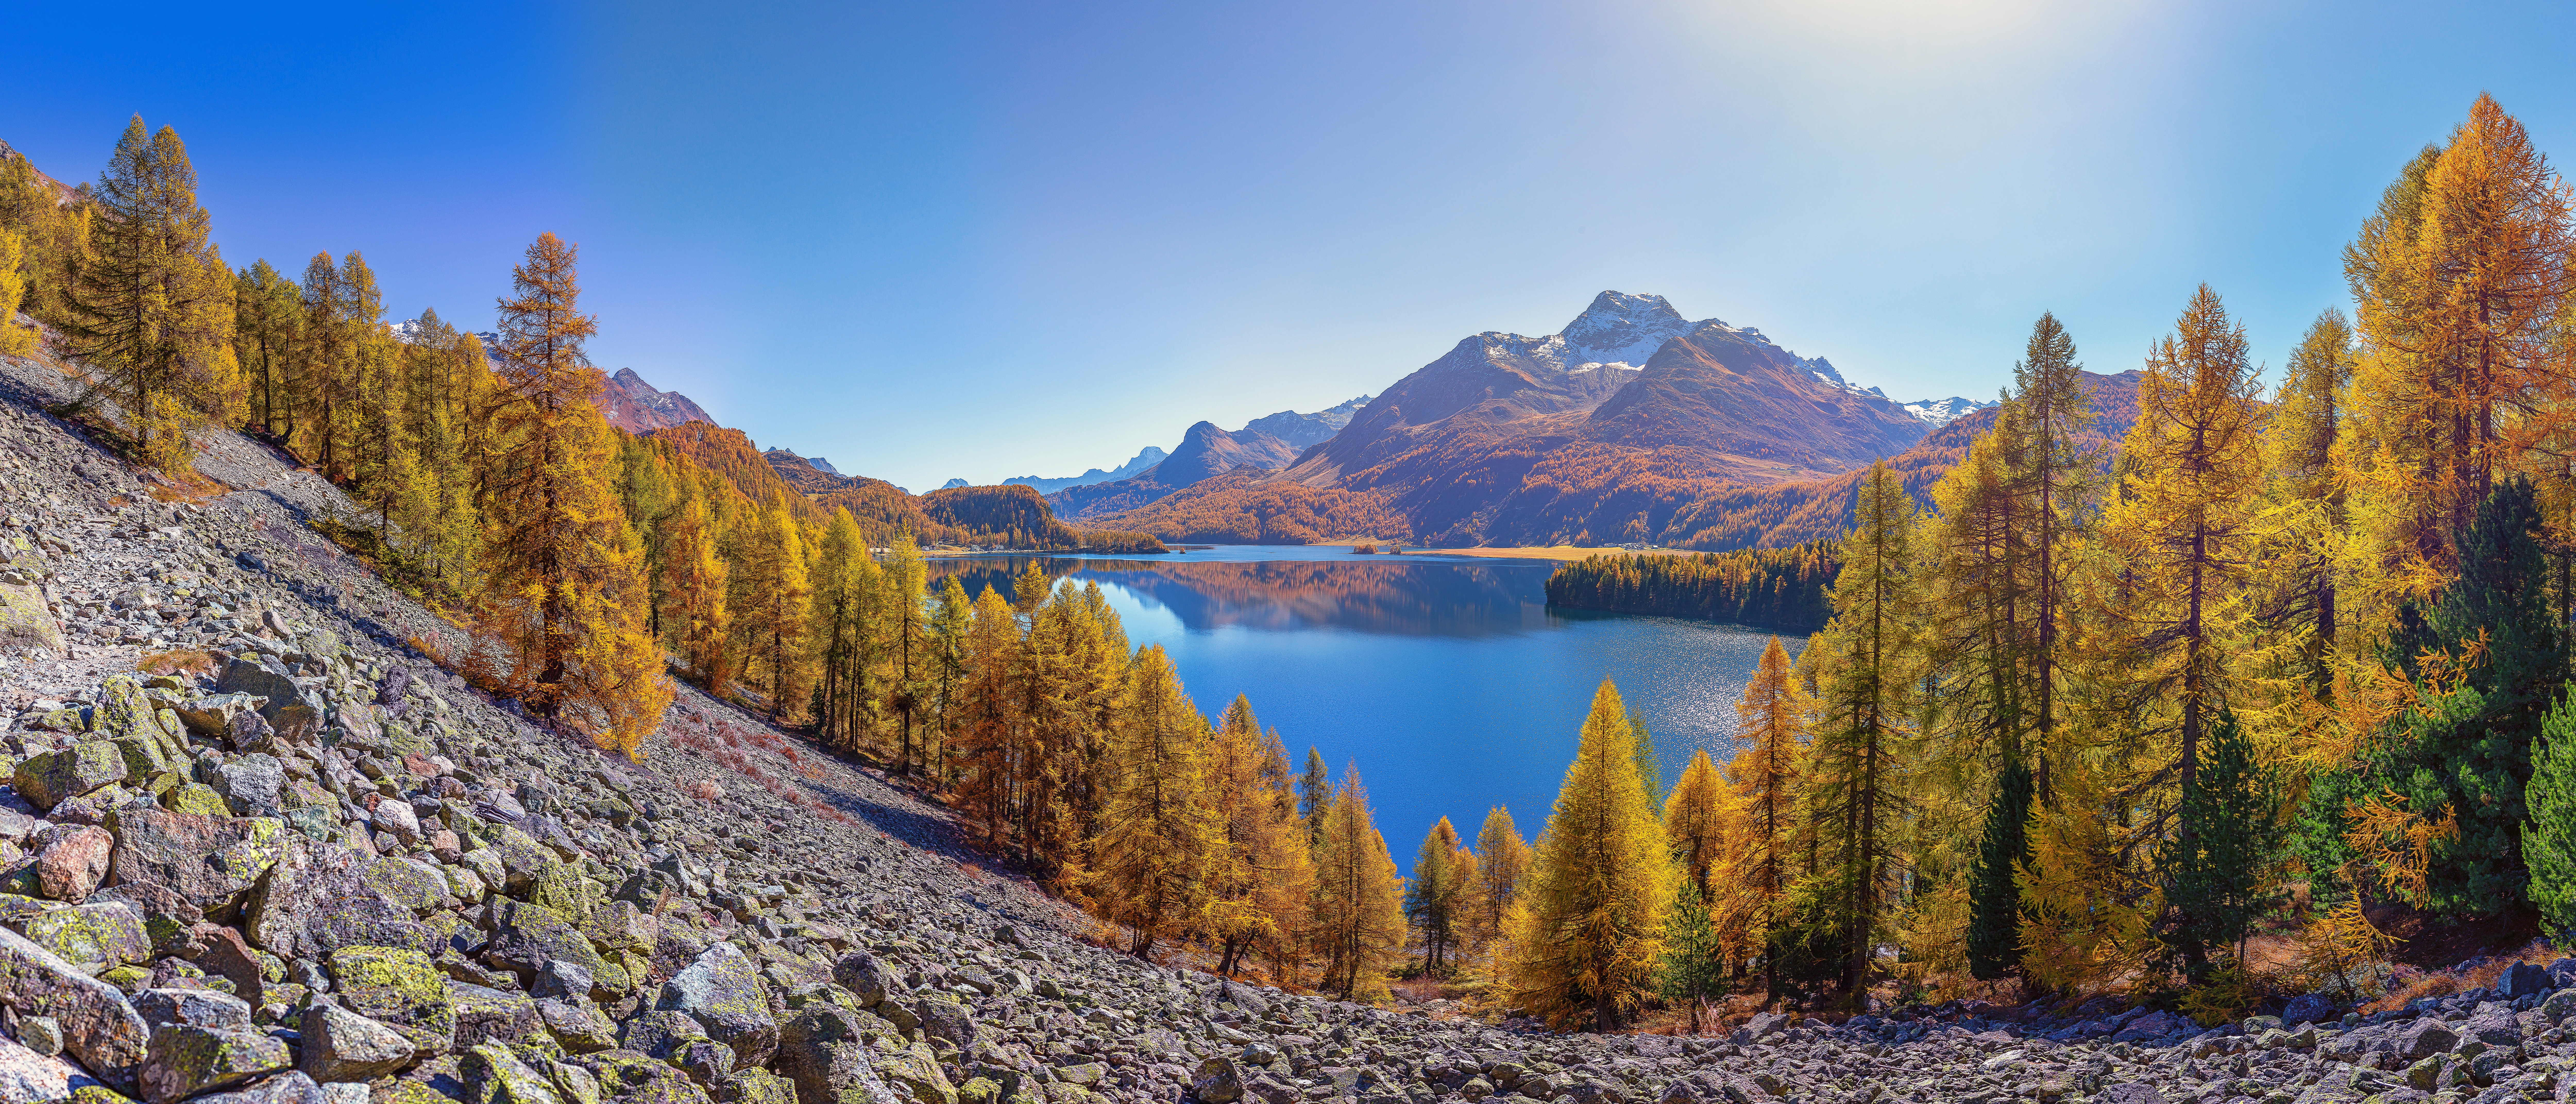 Handy-Wallpaper Landschaft, Herbst, Seen, See, Wald, Gebirge, Panorama, Erde/natur, Spiegelung kostenlos herunterladen.